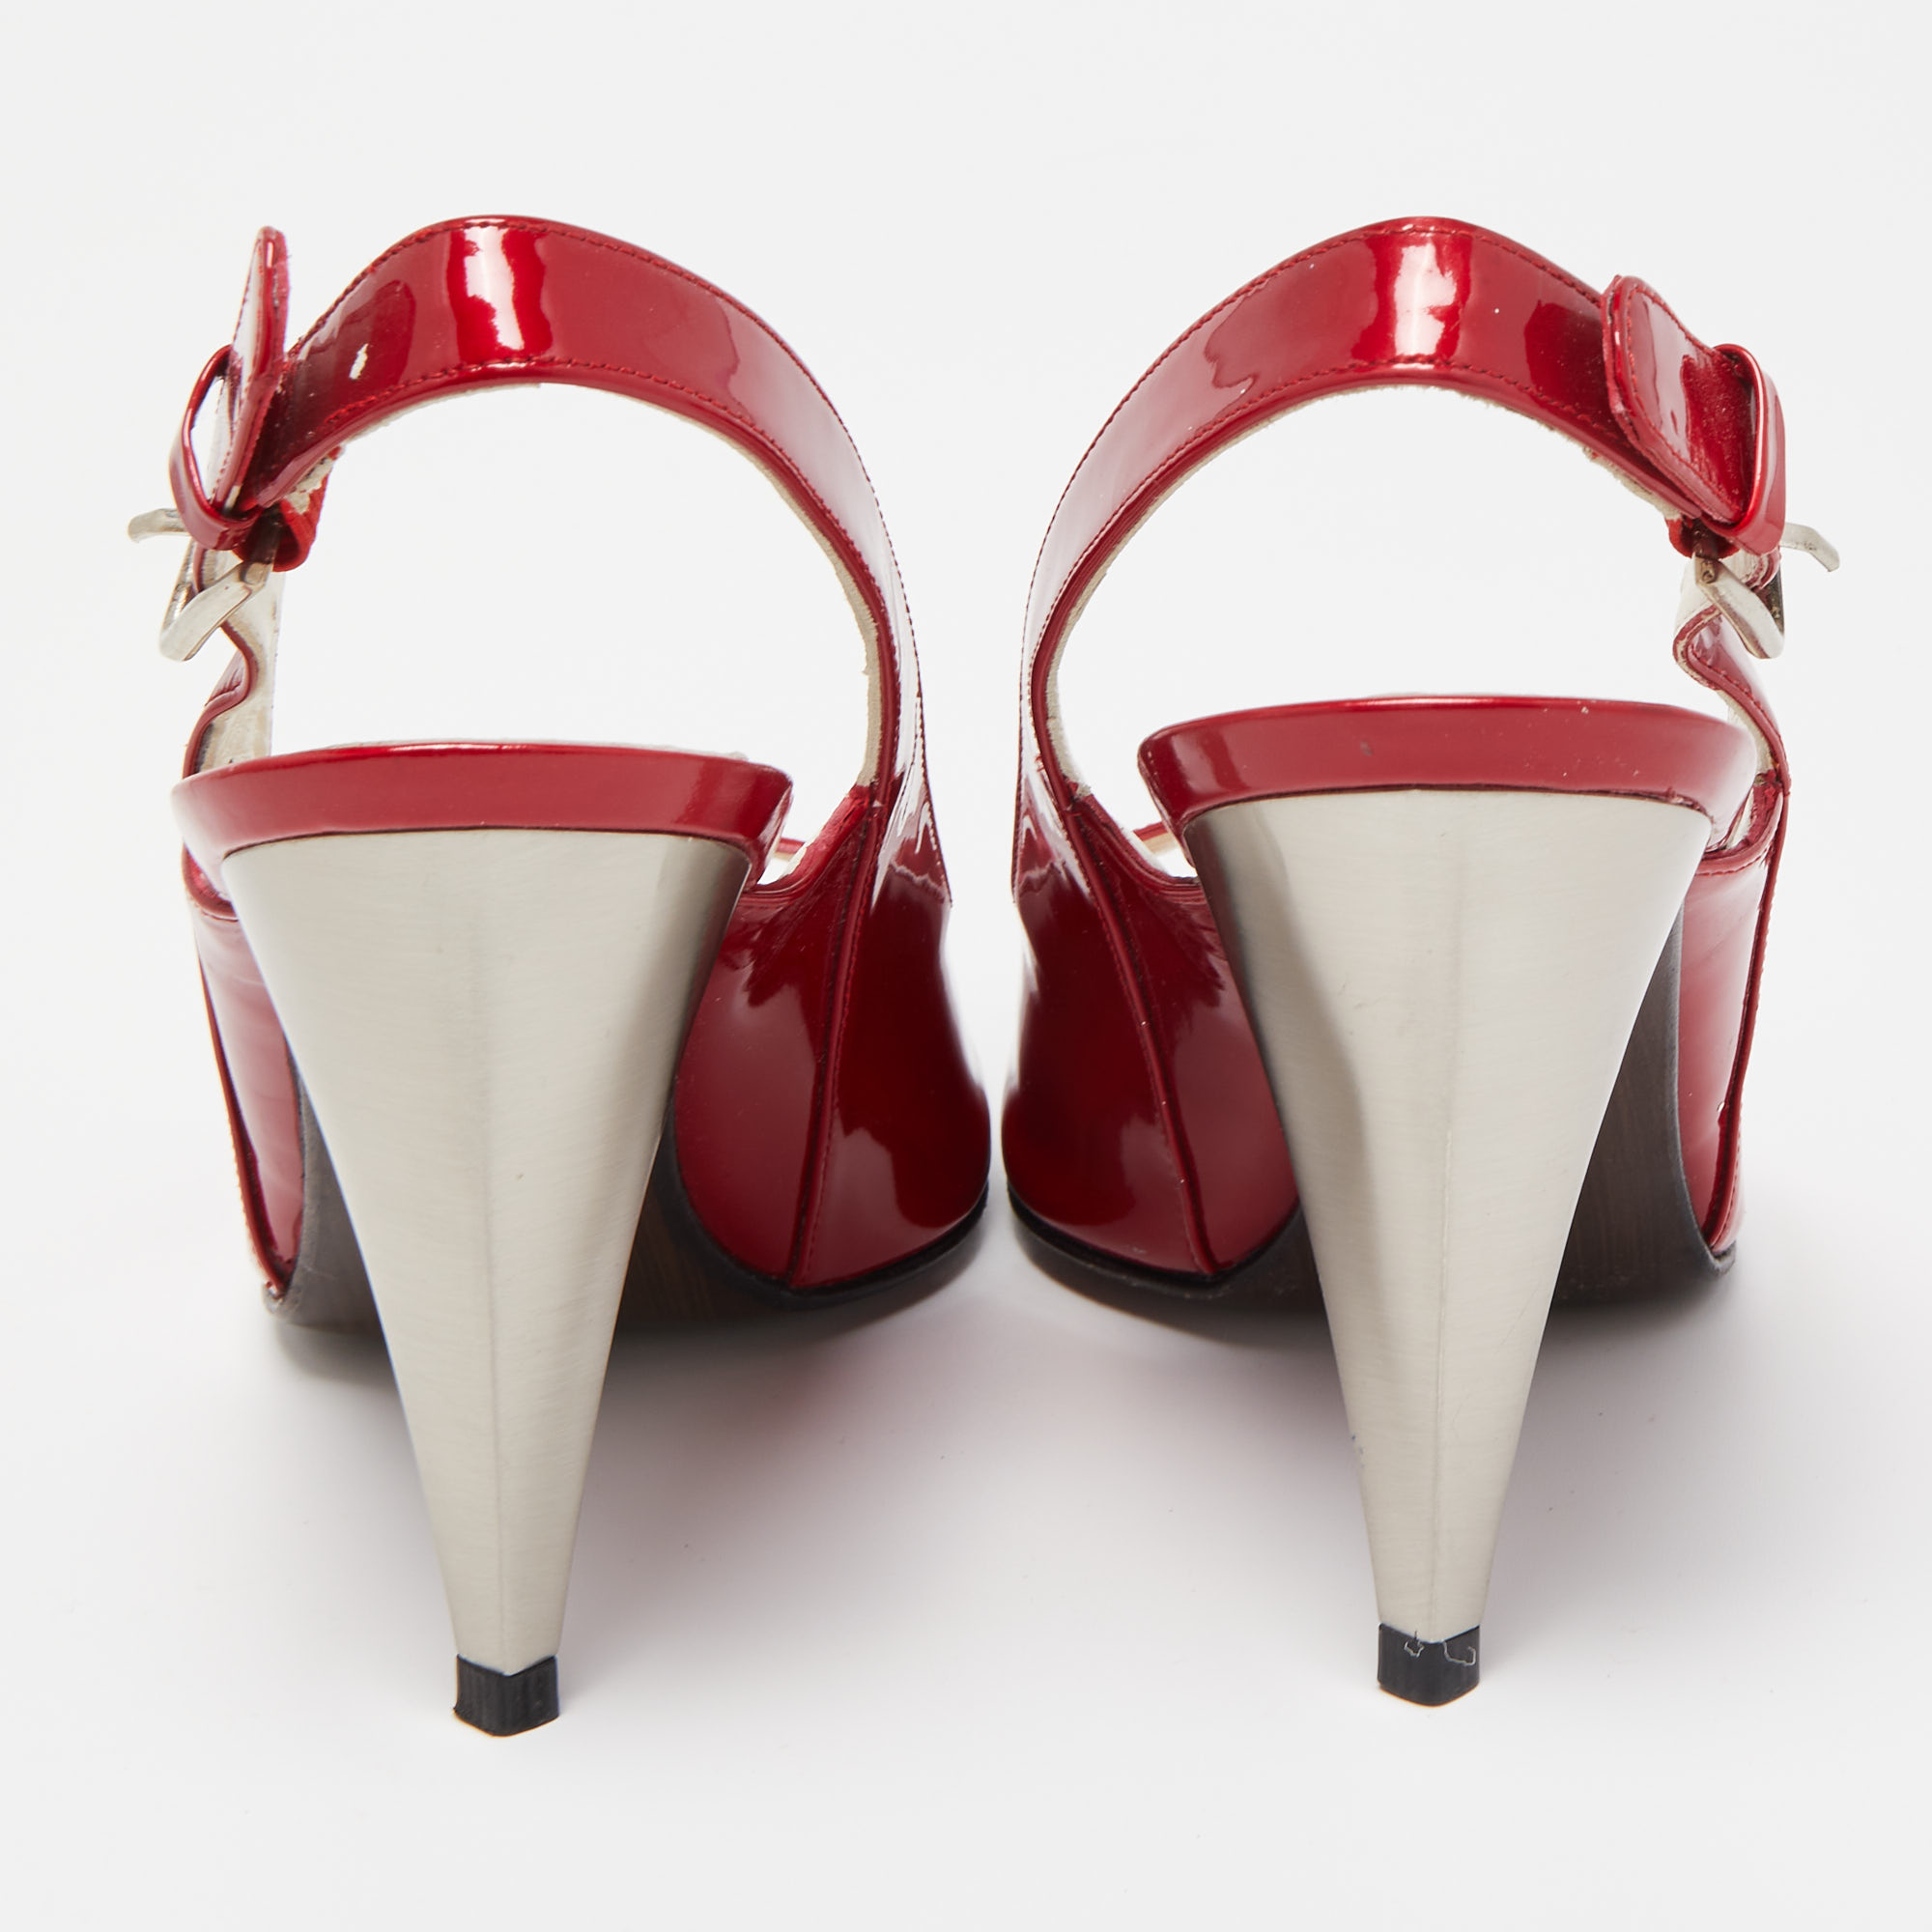 Stuart Weitzman Red Patent Leather Peep Toe Slingback Pumps Size 37.5